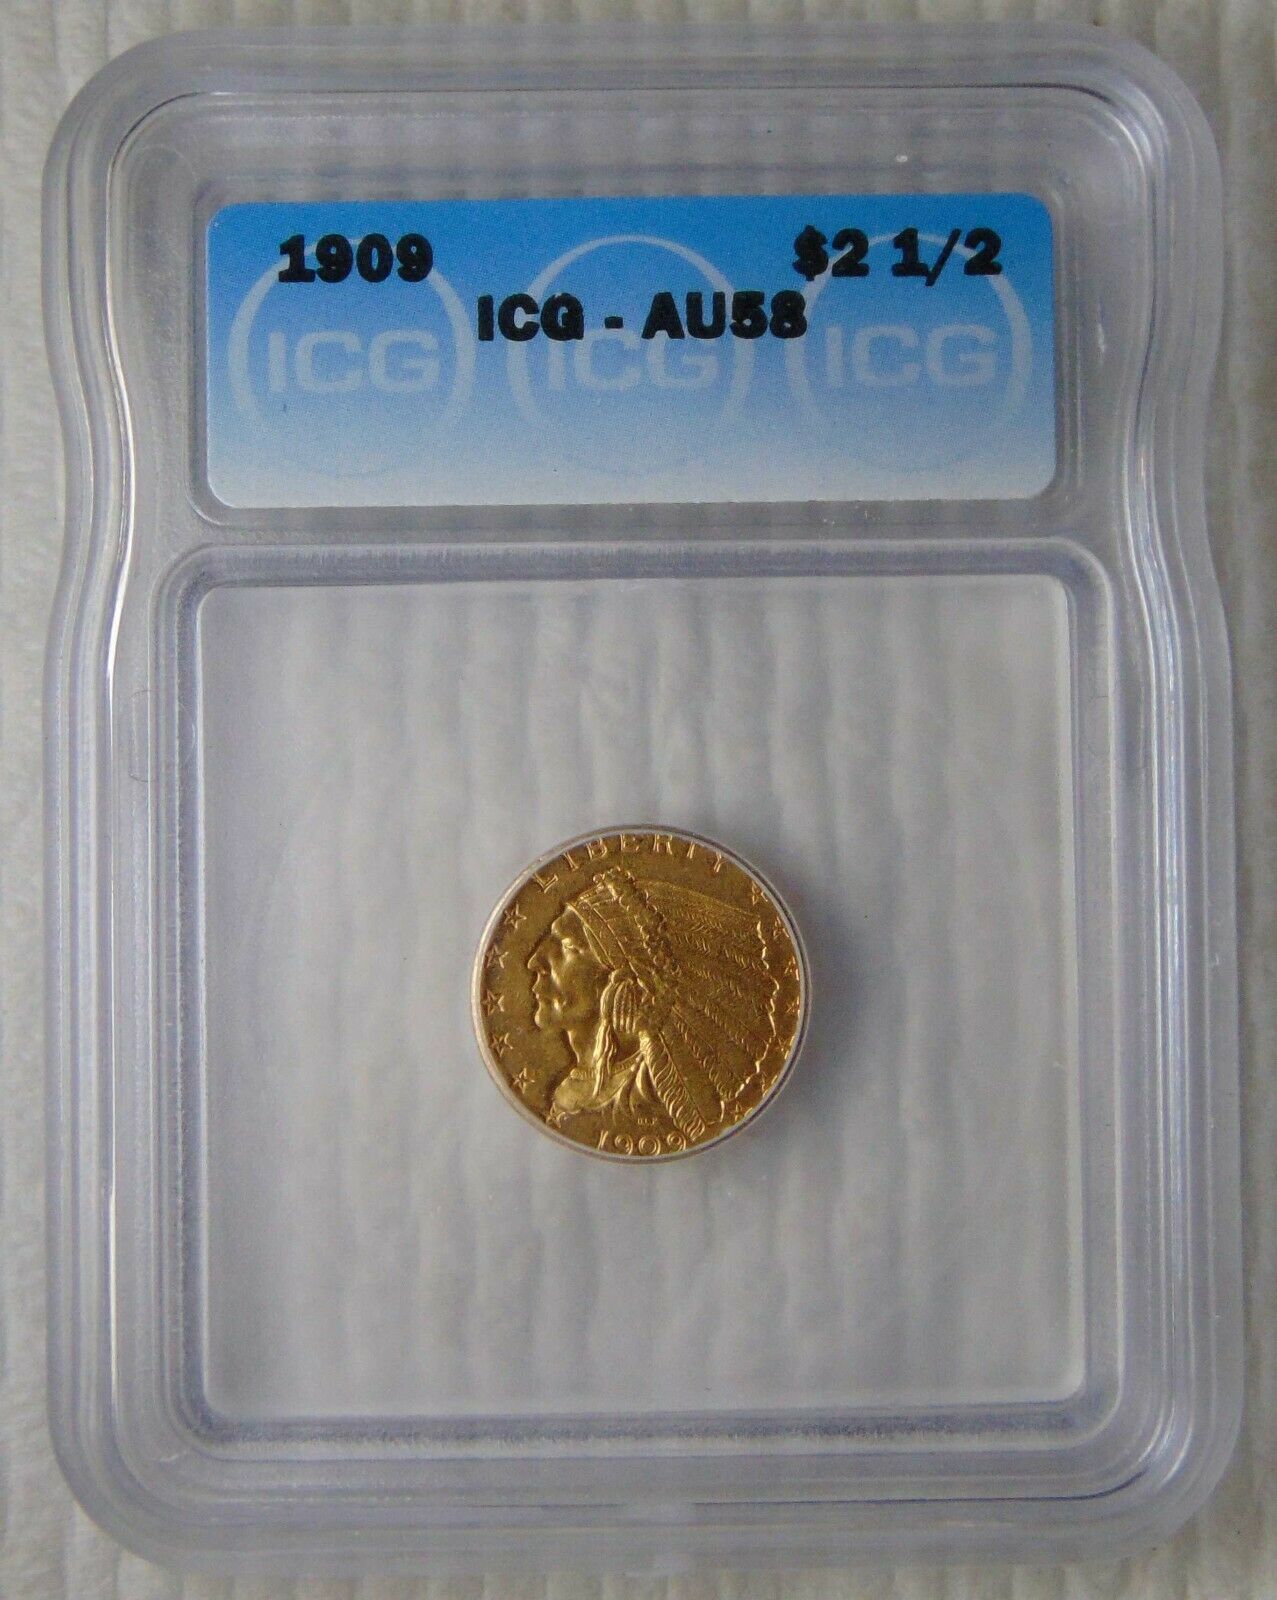 1909 Indian Head $2.5 Quarter Eagle Gold Coin, Icg Au 58, Nice!